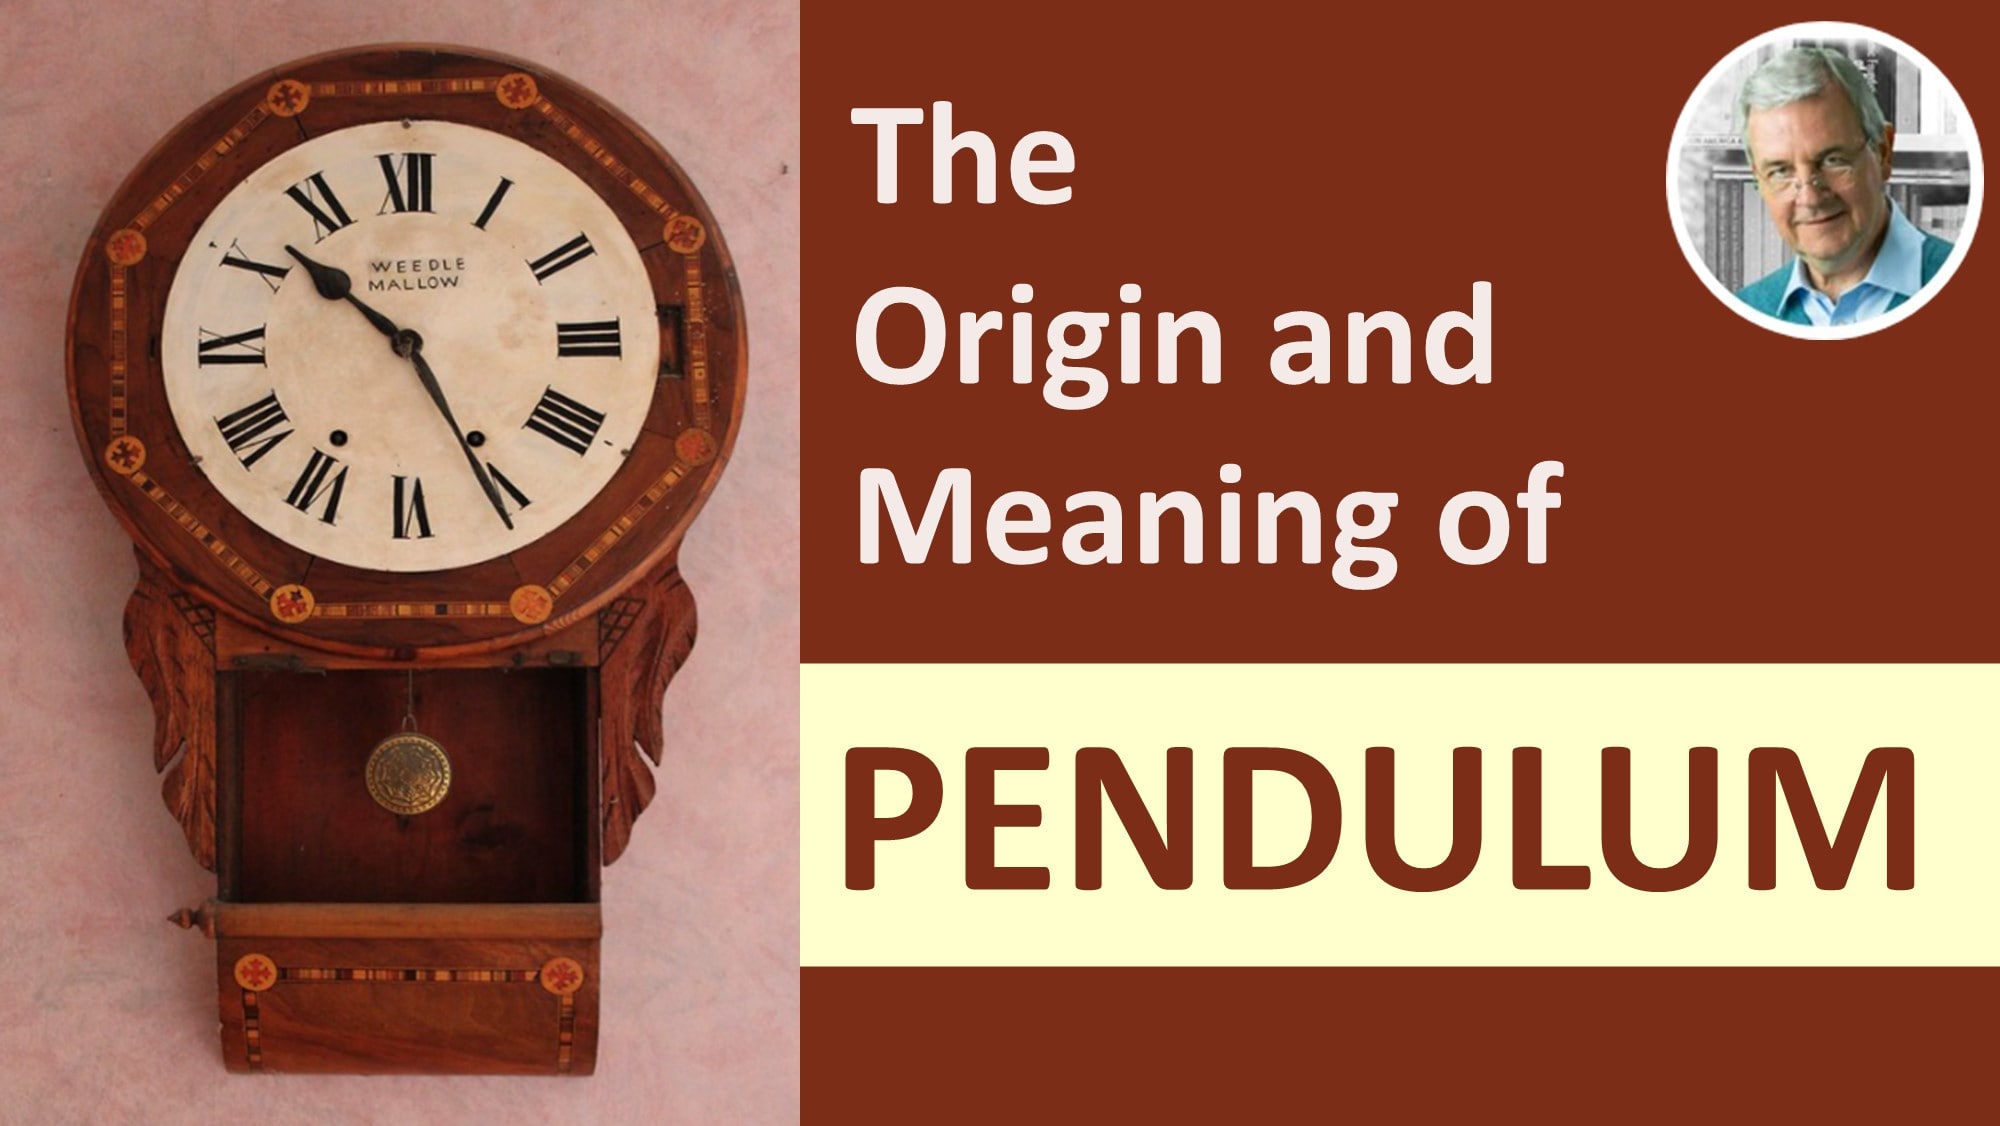 pendulum definition - pendulum in a sentence